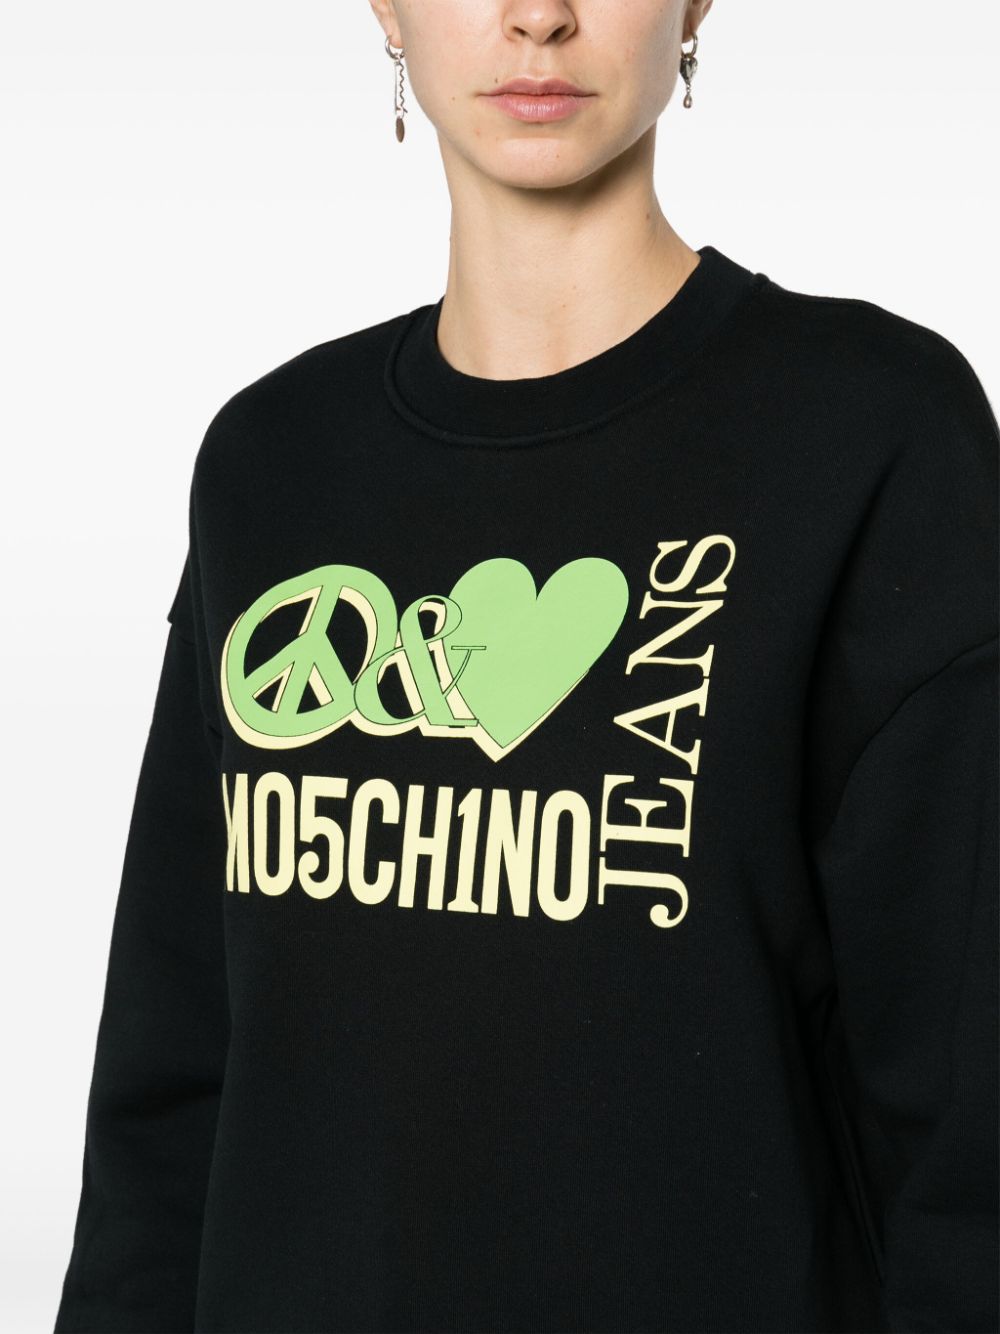 MOSCHINO JEANS Katoenen sweater met logoprint Zwart